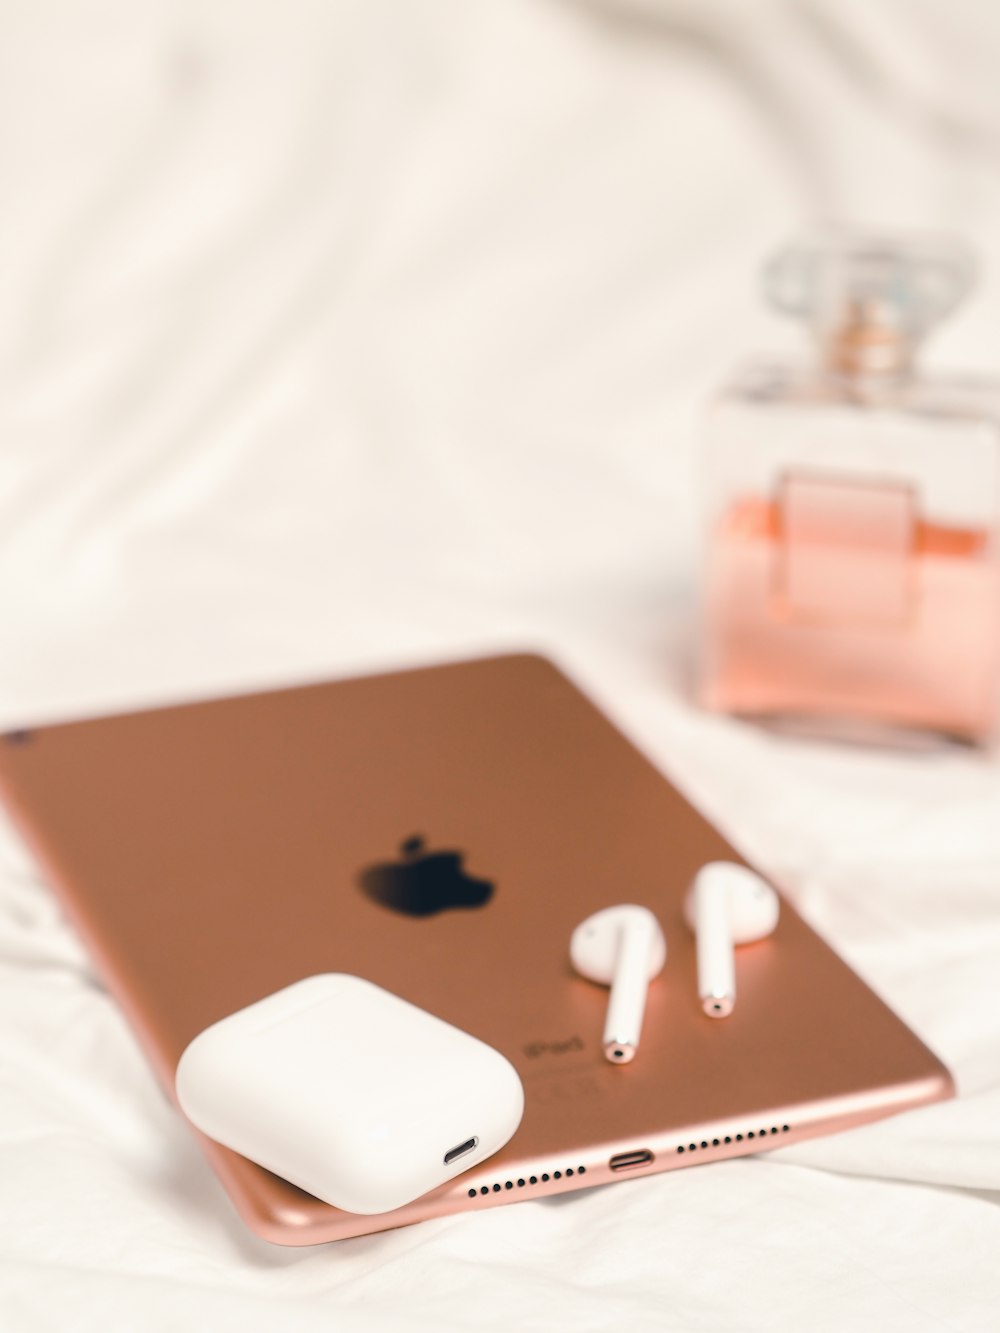 apple earpods on silver macbook photo – Free Paris Image on Unsplash